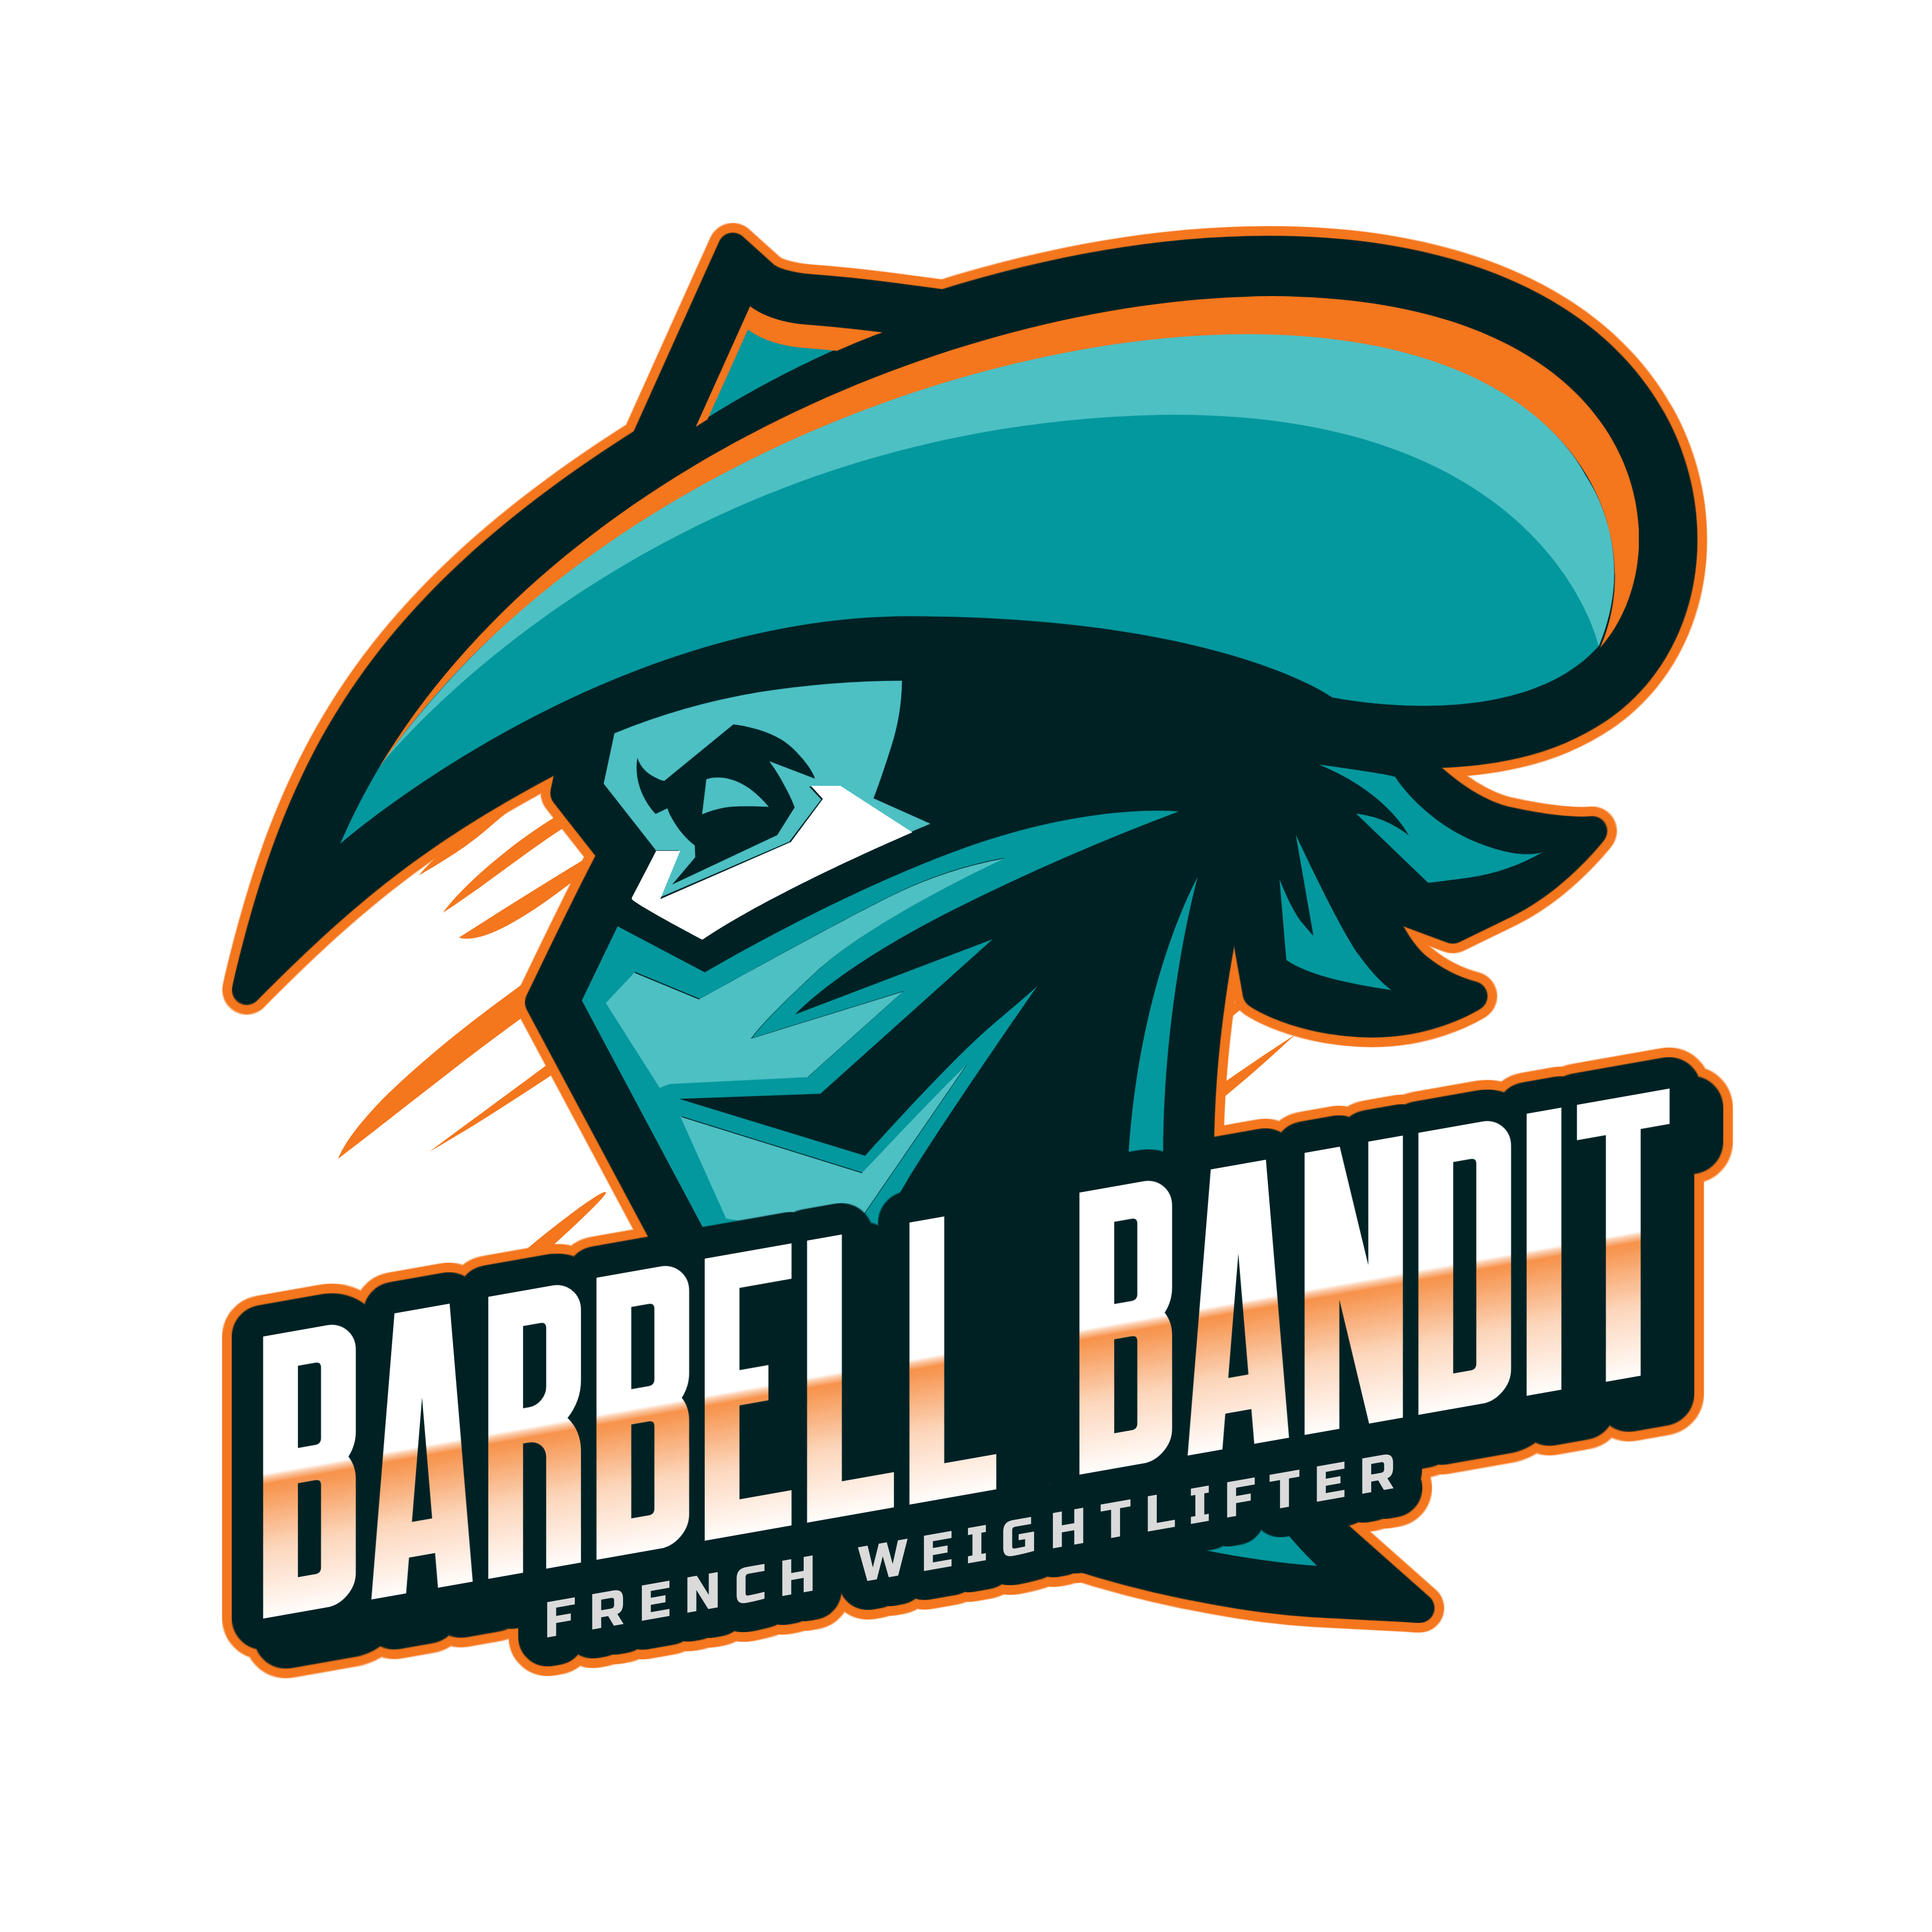 Barbell Bandit